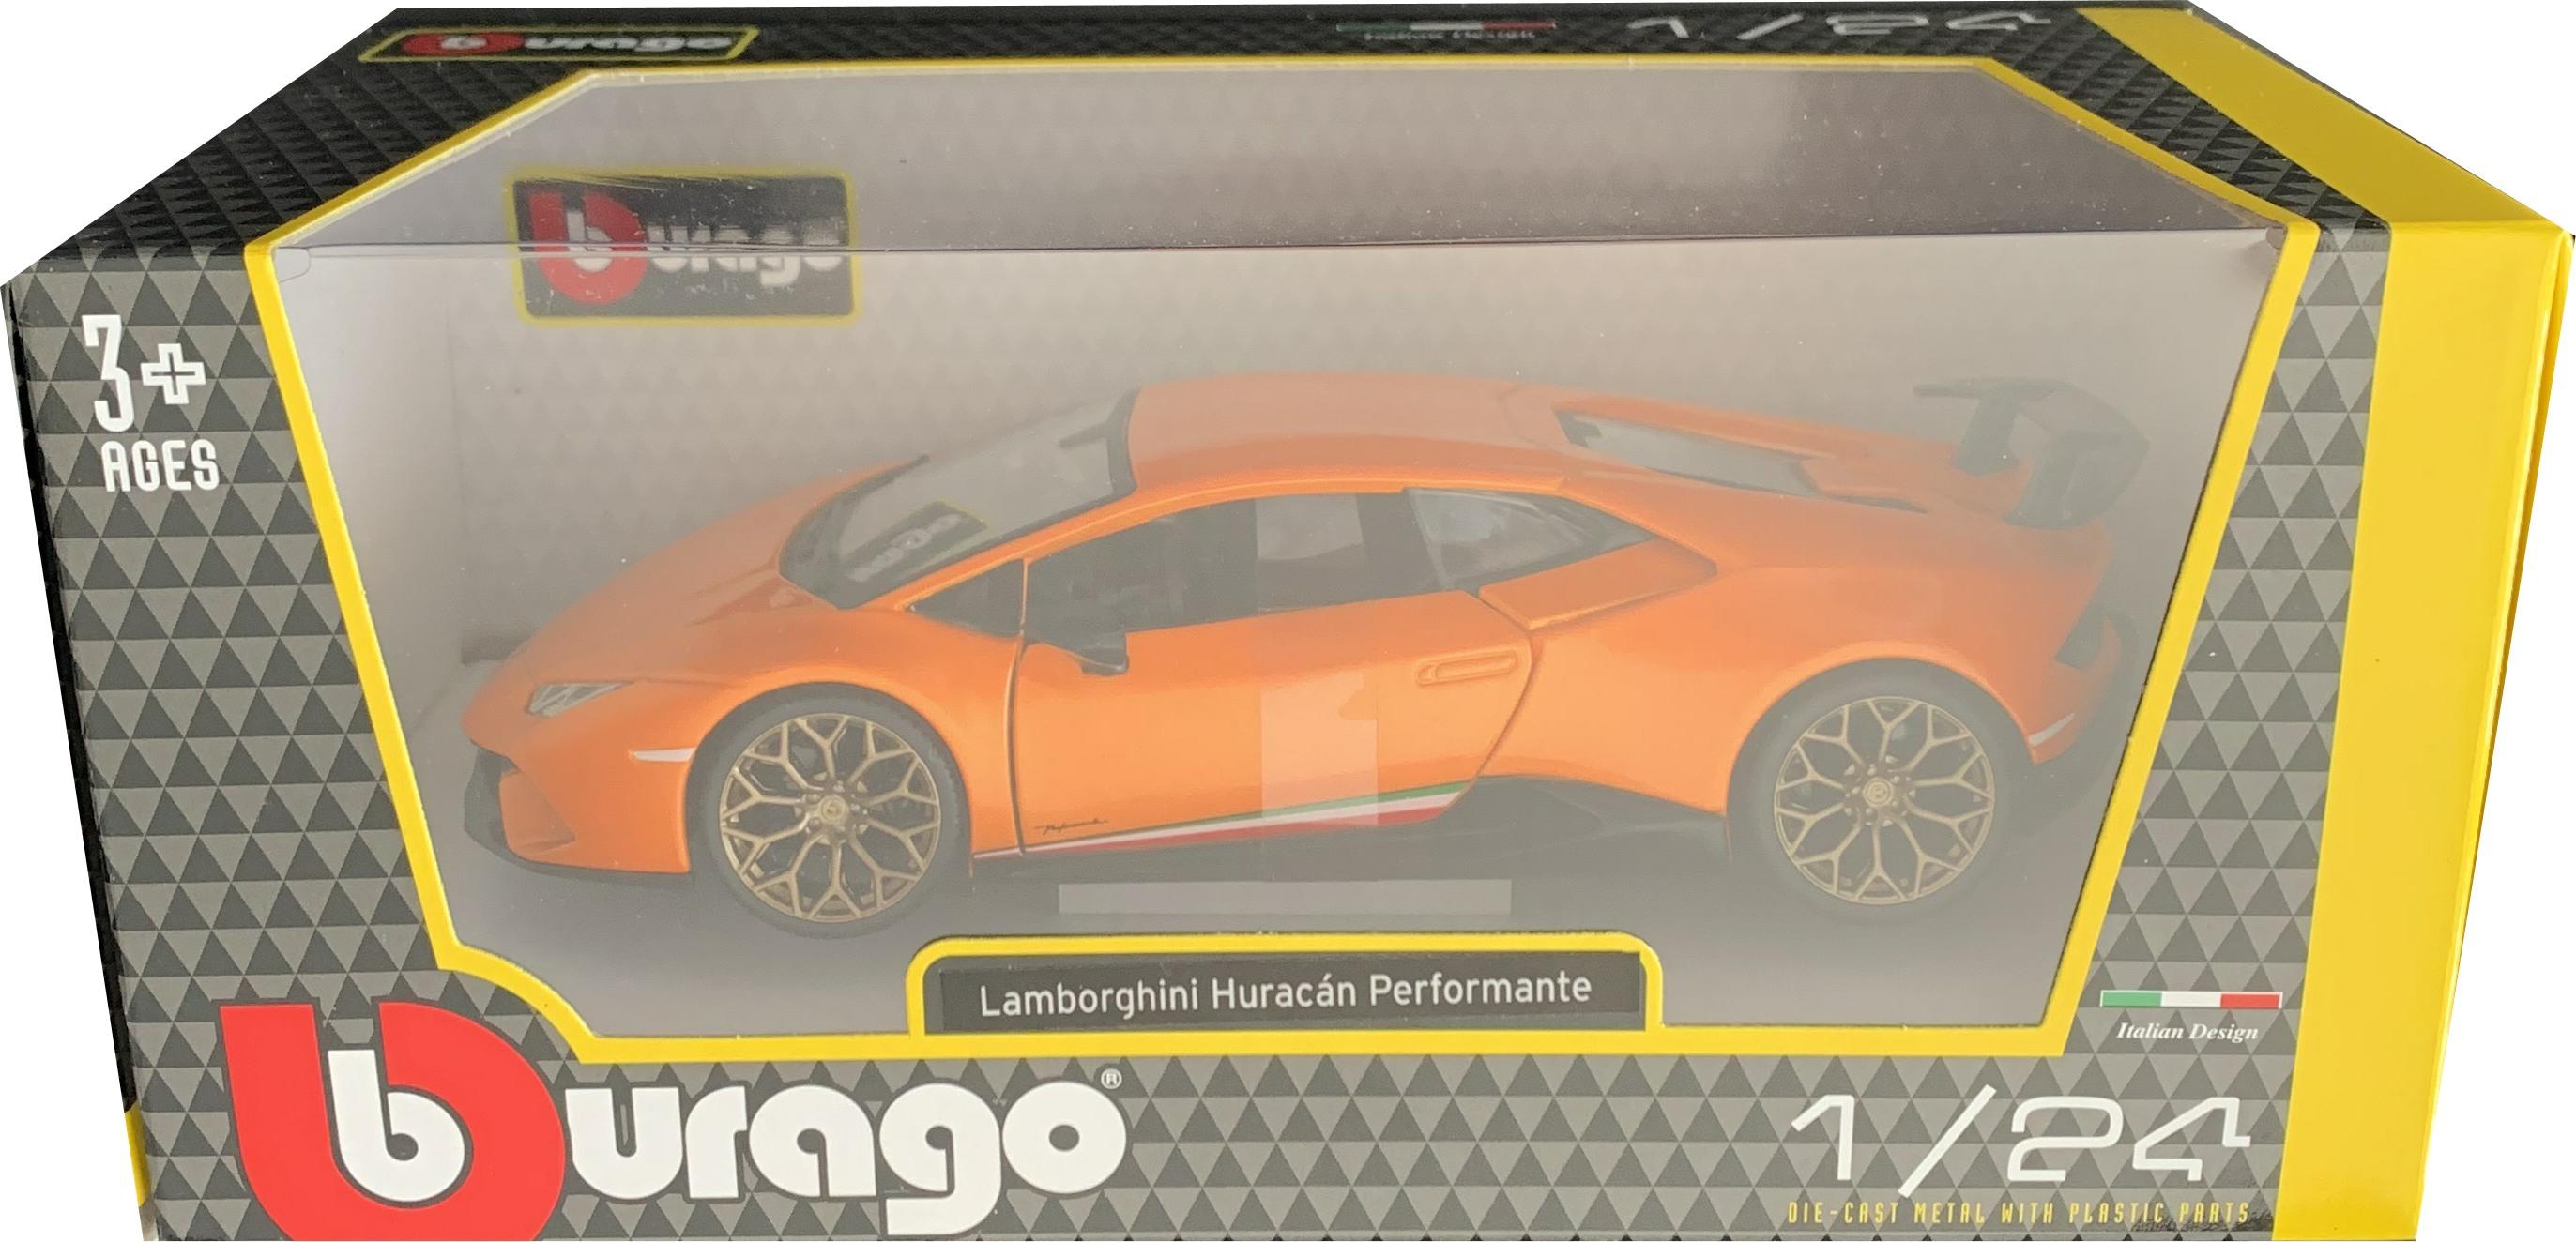 Lamborghini Huracan Performante in orange 1:24 scale model from Bburago